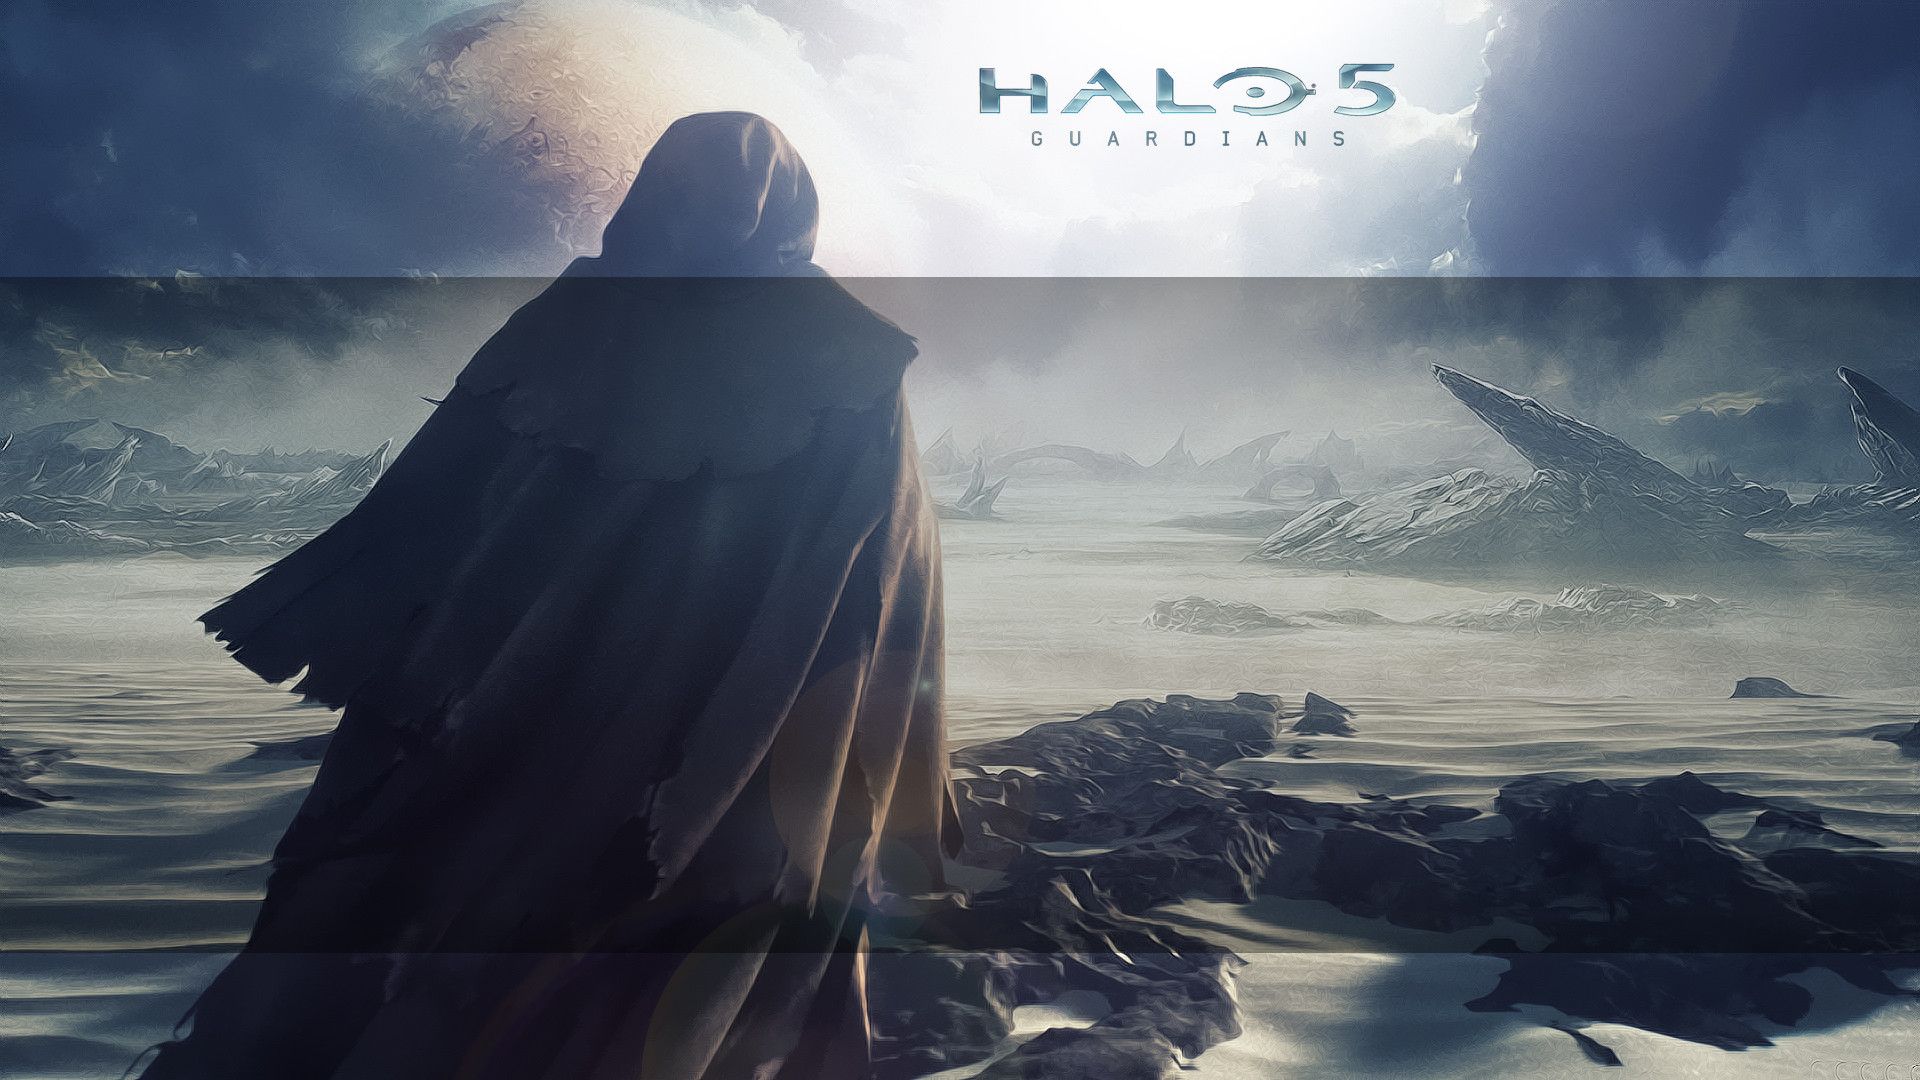 Halo 5: Guardians Video Game 2 Cool Hd Wallpaper - Hivewallpaper.com